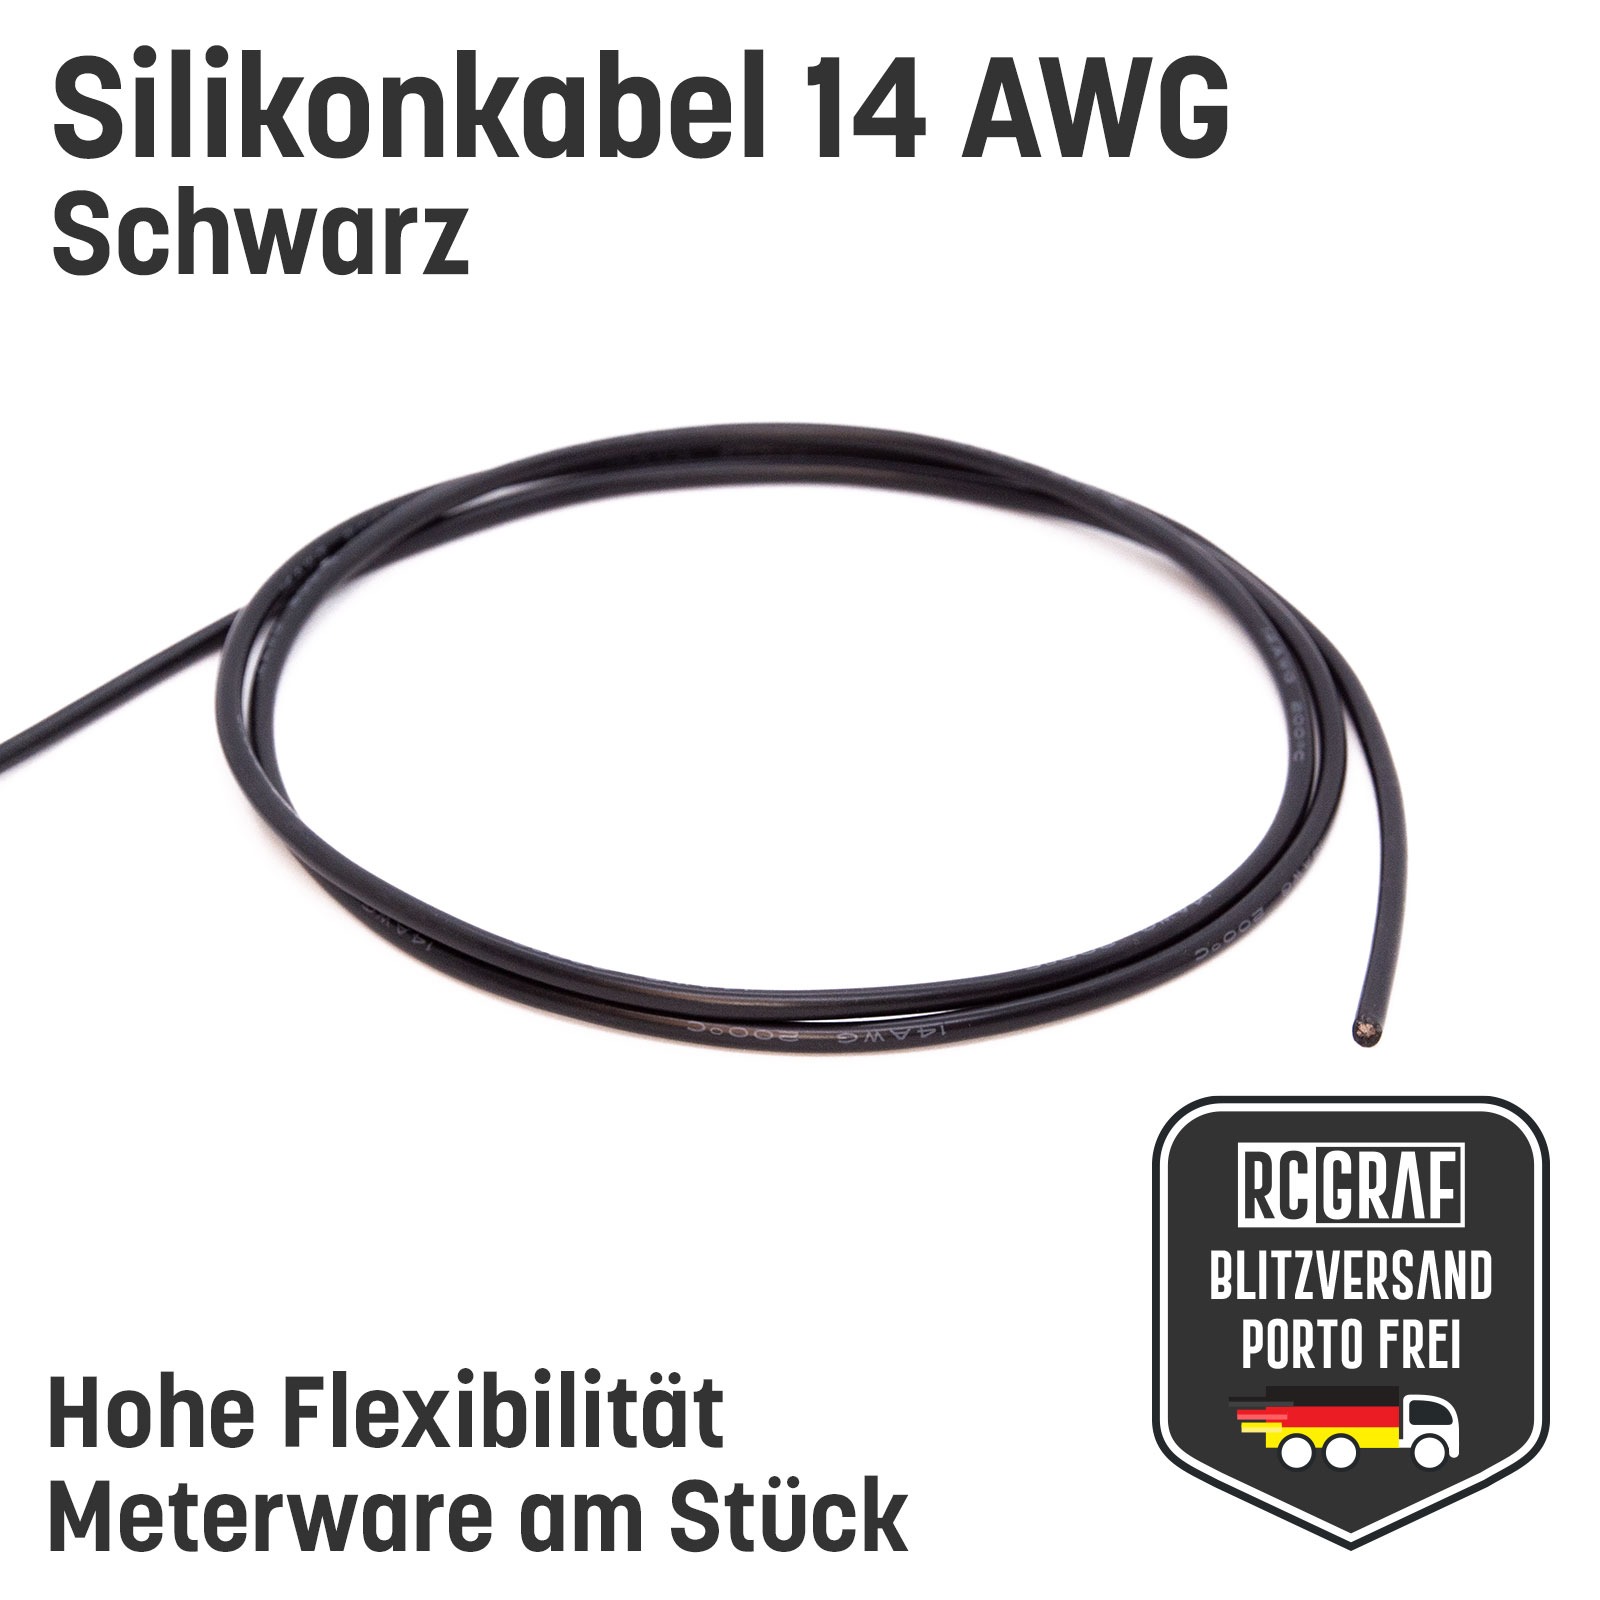 Silikonkabel 14 AWG 3 Meter Schwarz hochflexibel